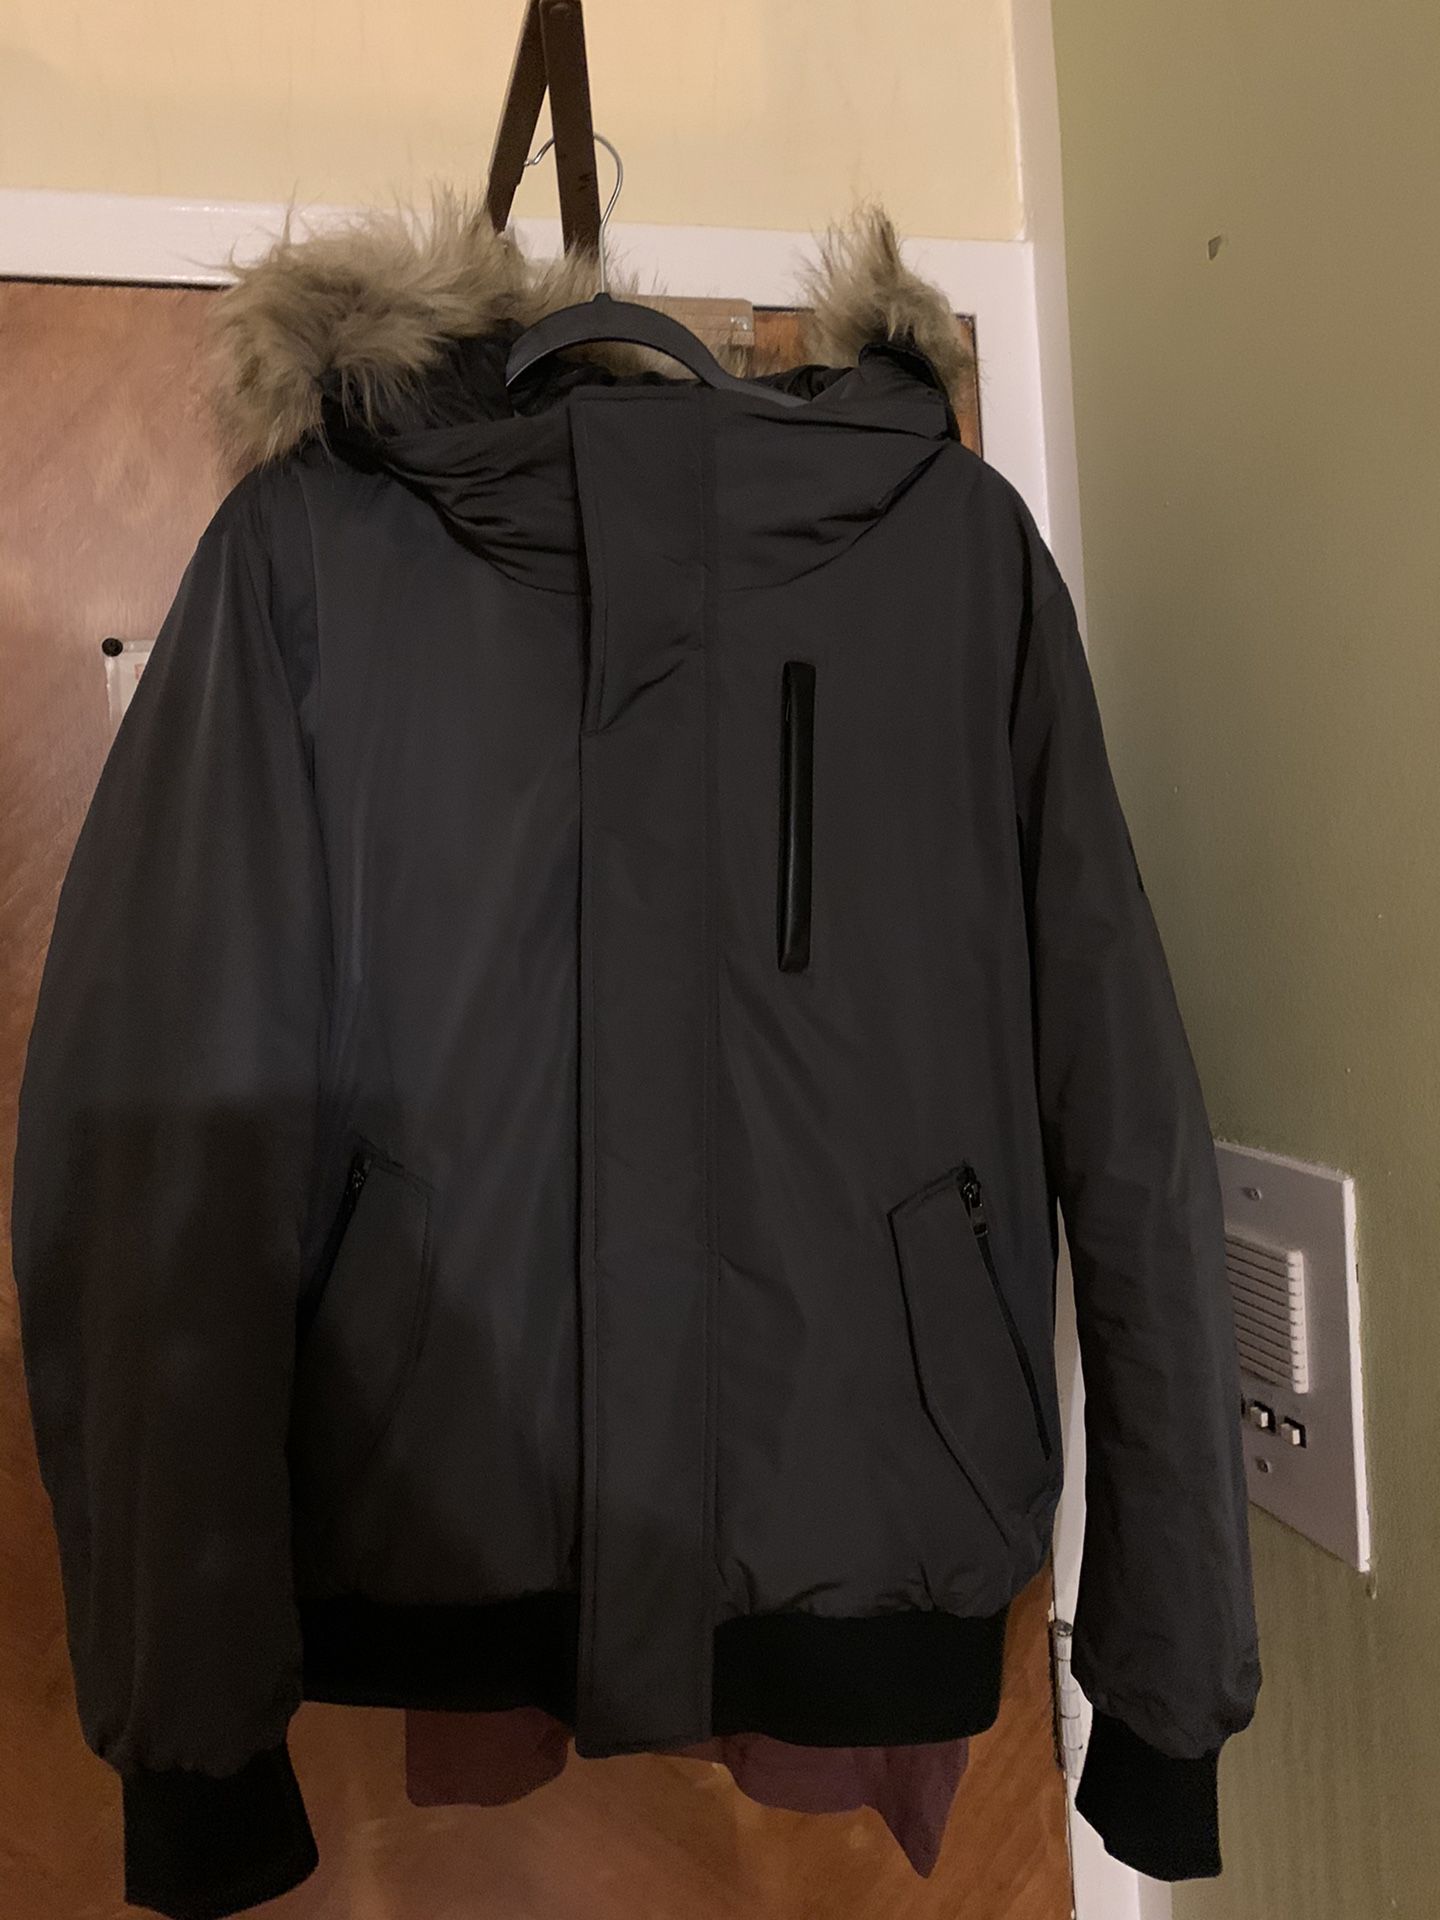 Calvin Klein Winter Coat/ Very Warm/ Size L